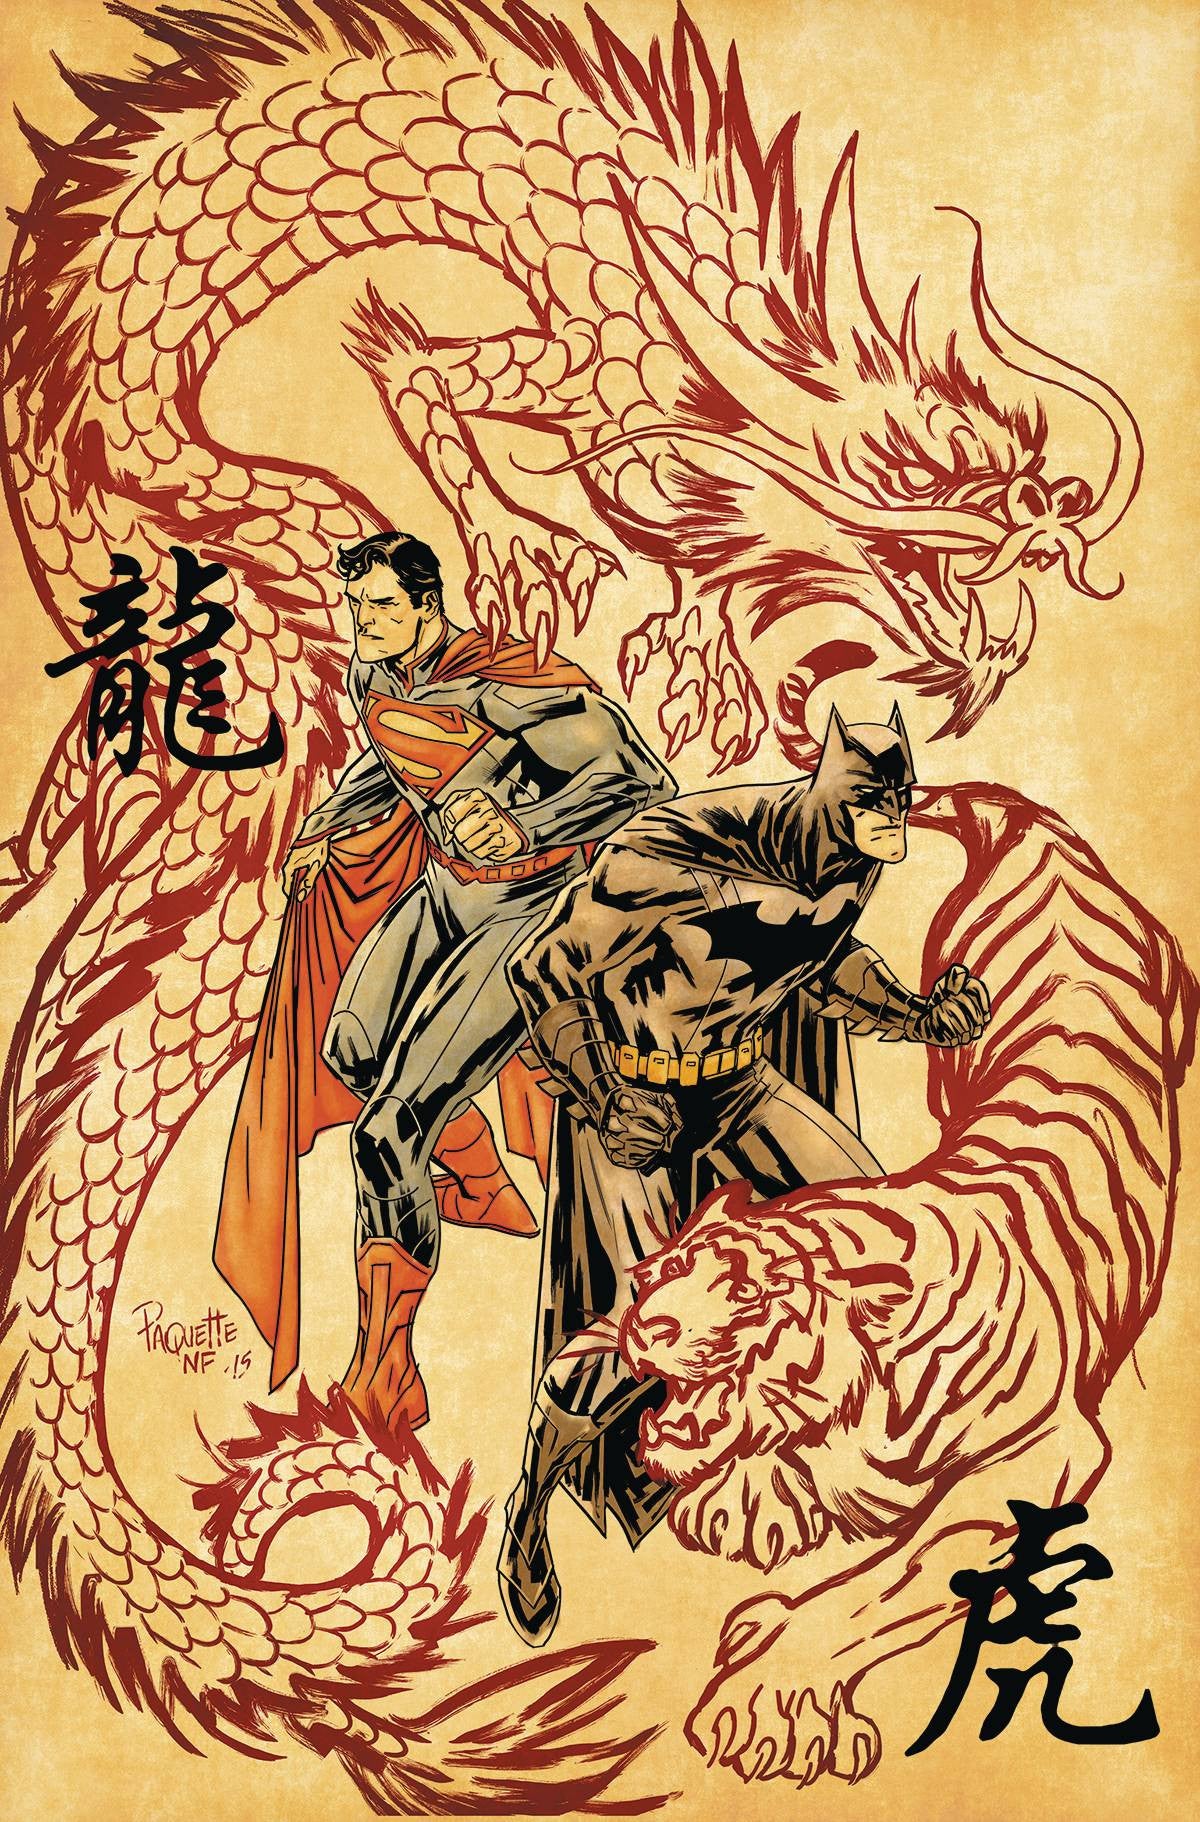 BATMAN SUPERMAN #31 (SUPER LEAGUE) COVER